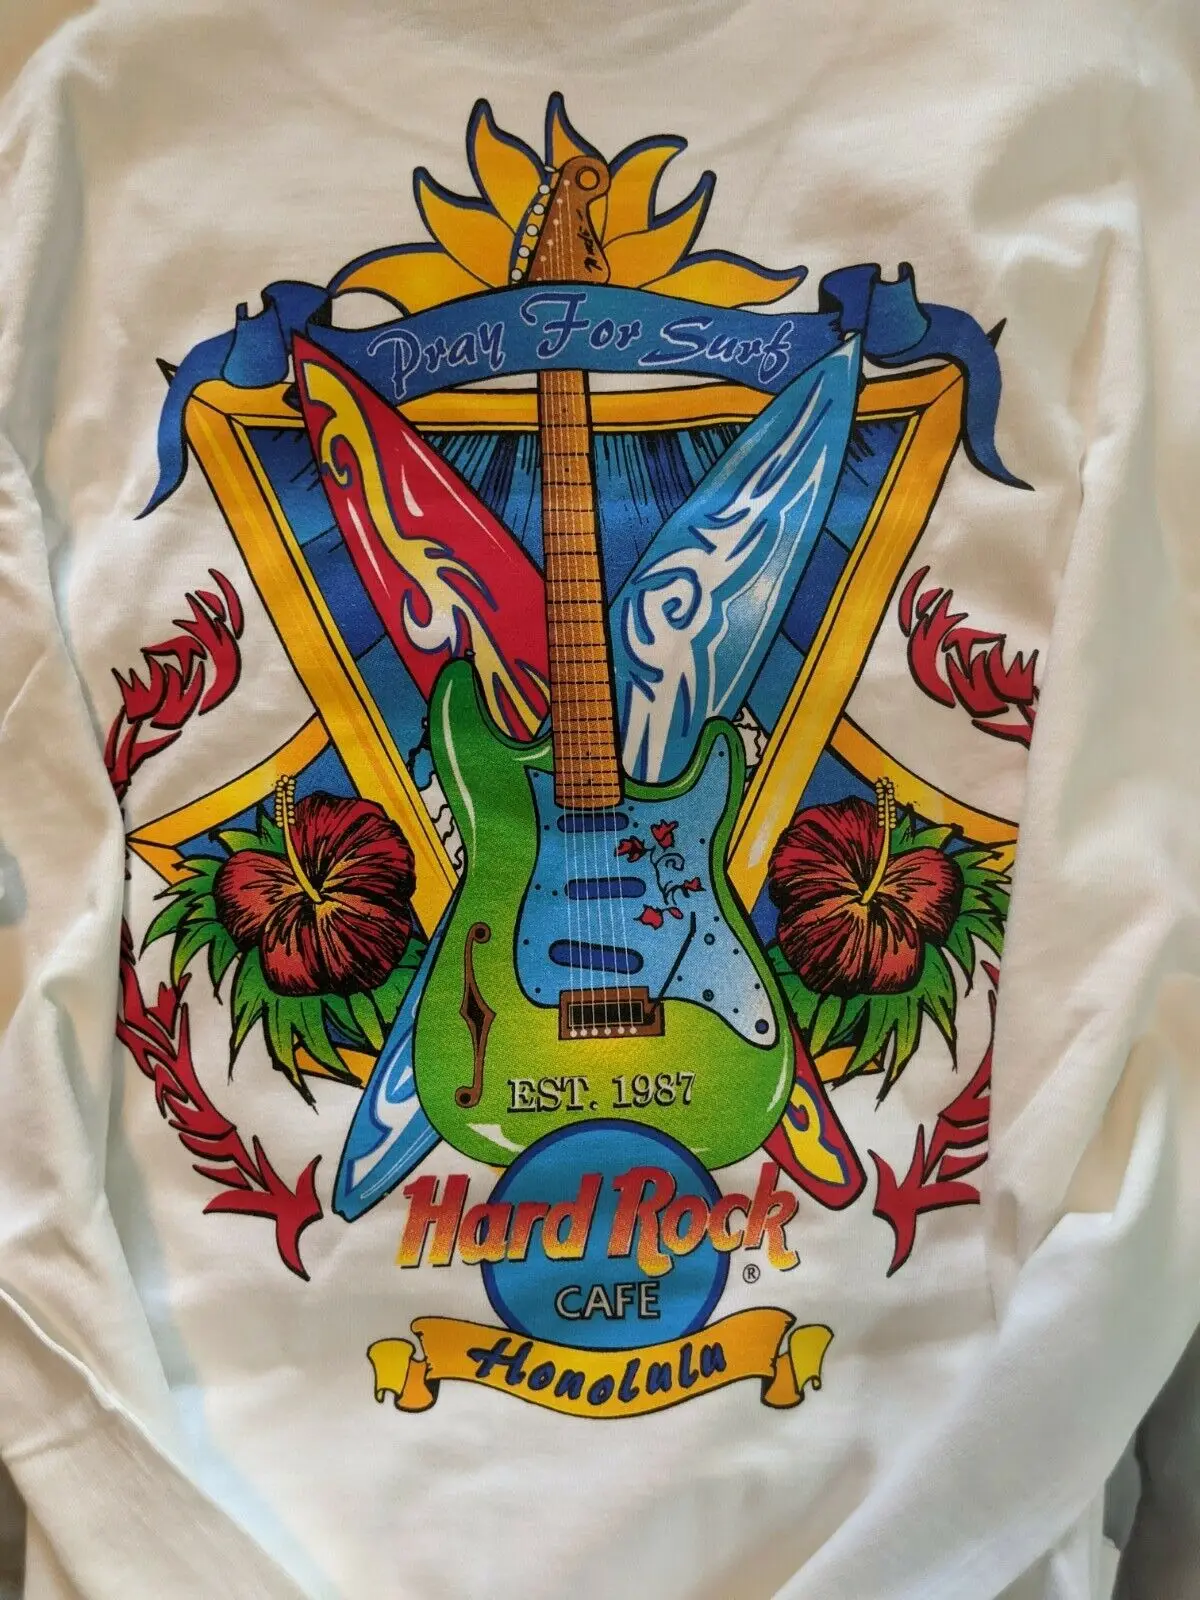 

VTG 90s Hard Rock man shirt Cafe Honolulu T shirt XL Graphic Tee Made USA Surf